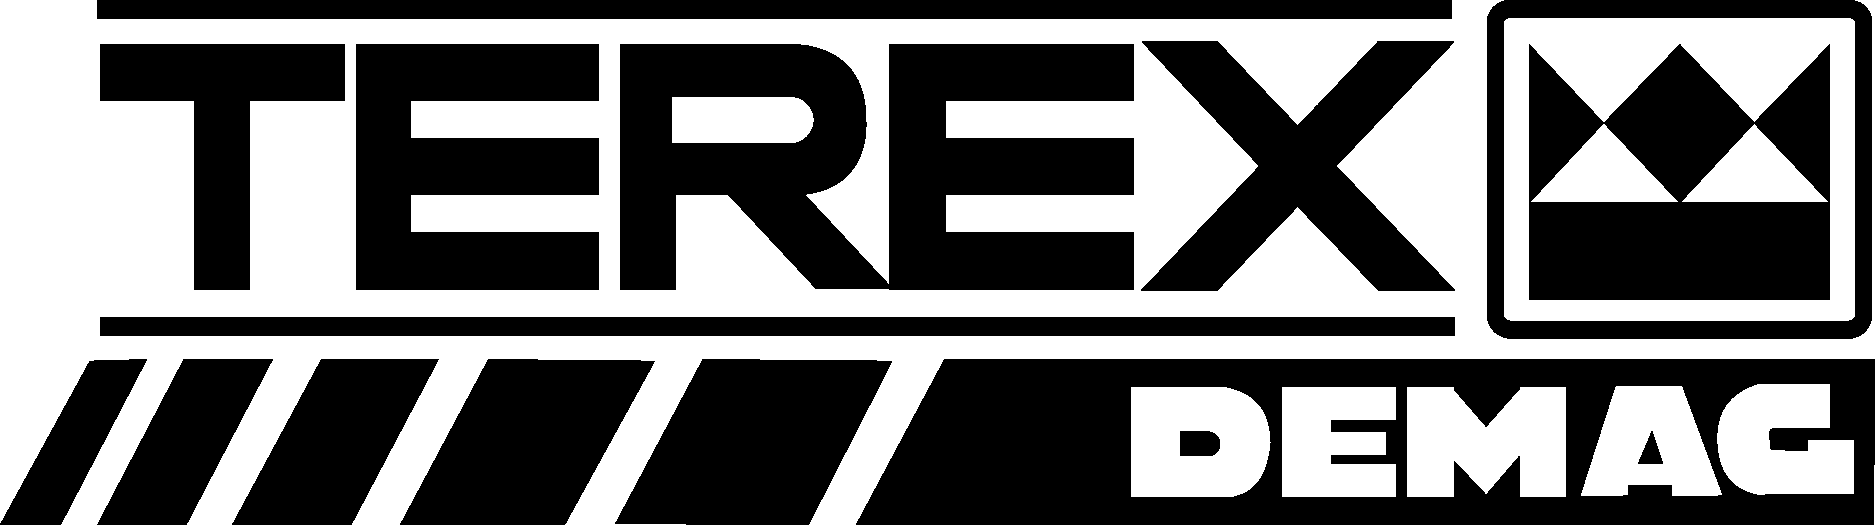 Terex Demag black Logo Vector